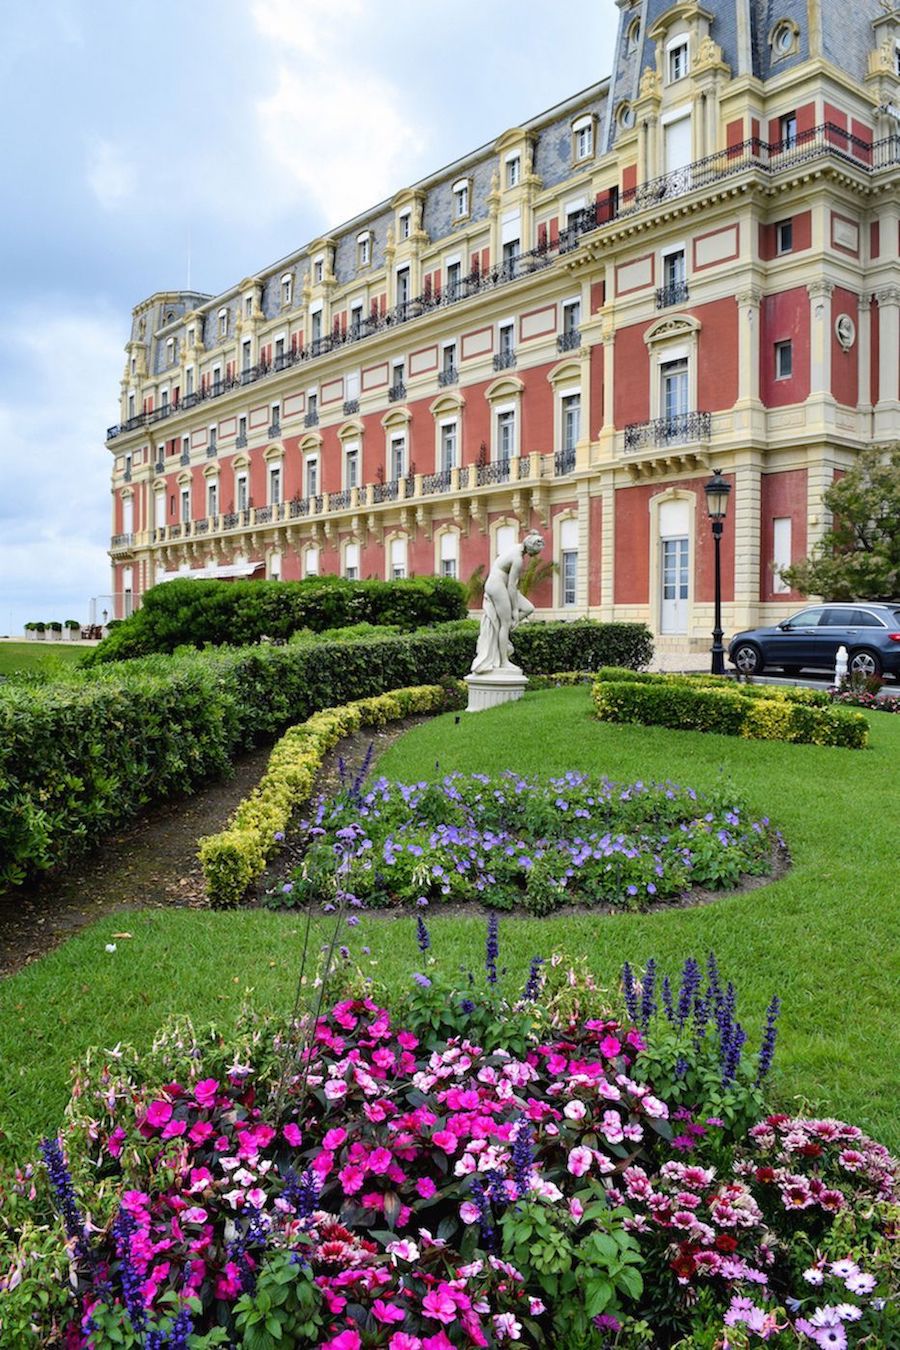 Hôtel du Palais: Former Imperial Residence Turned Luxury Hotel